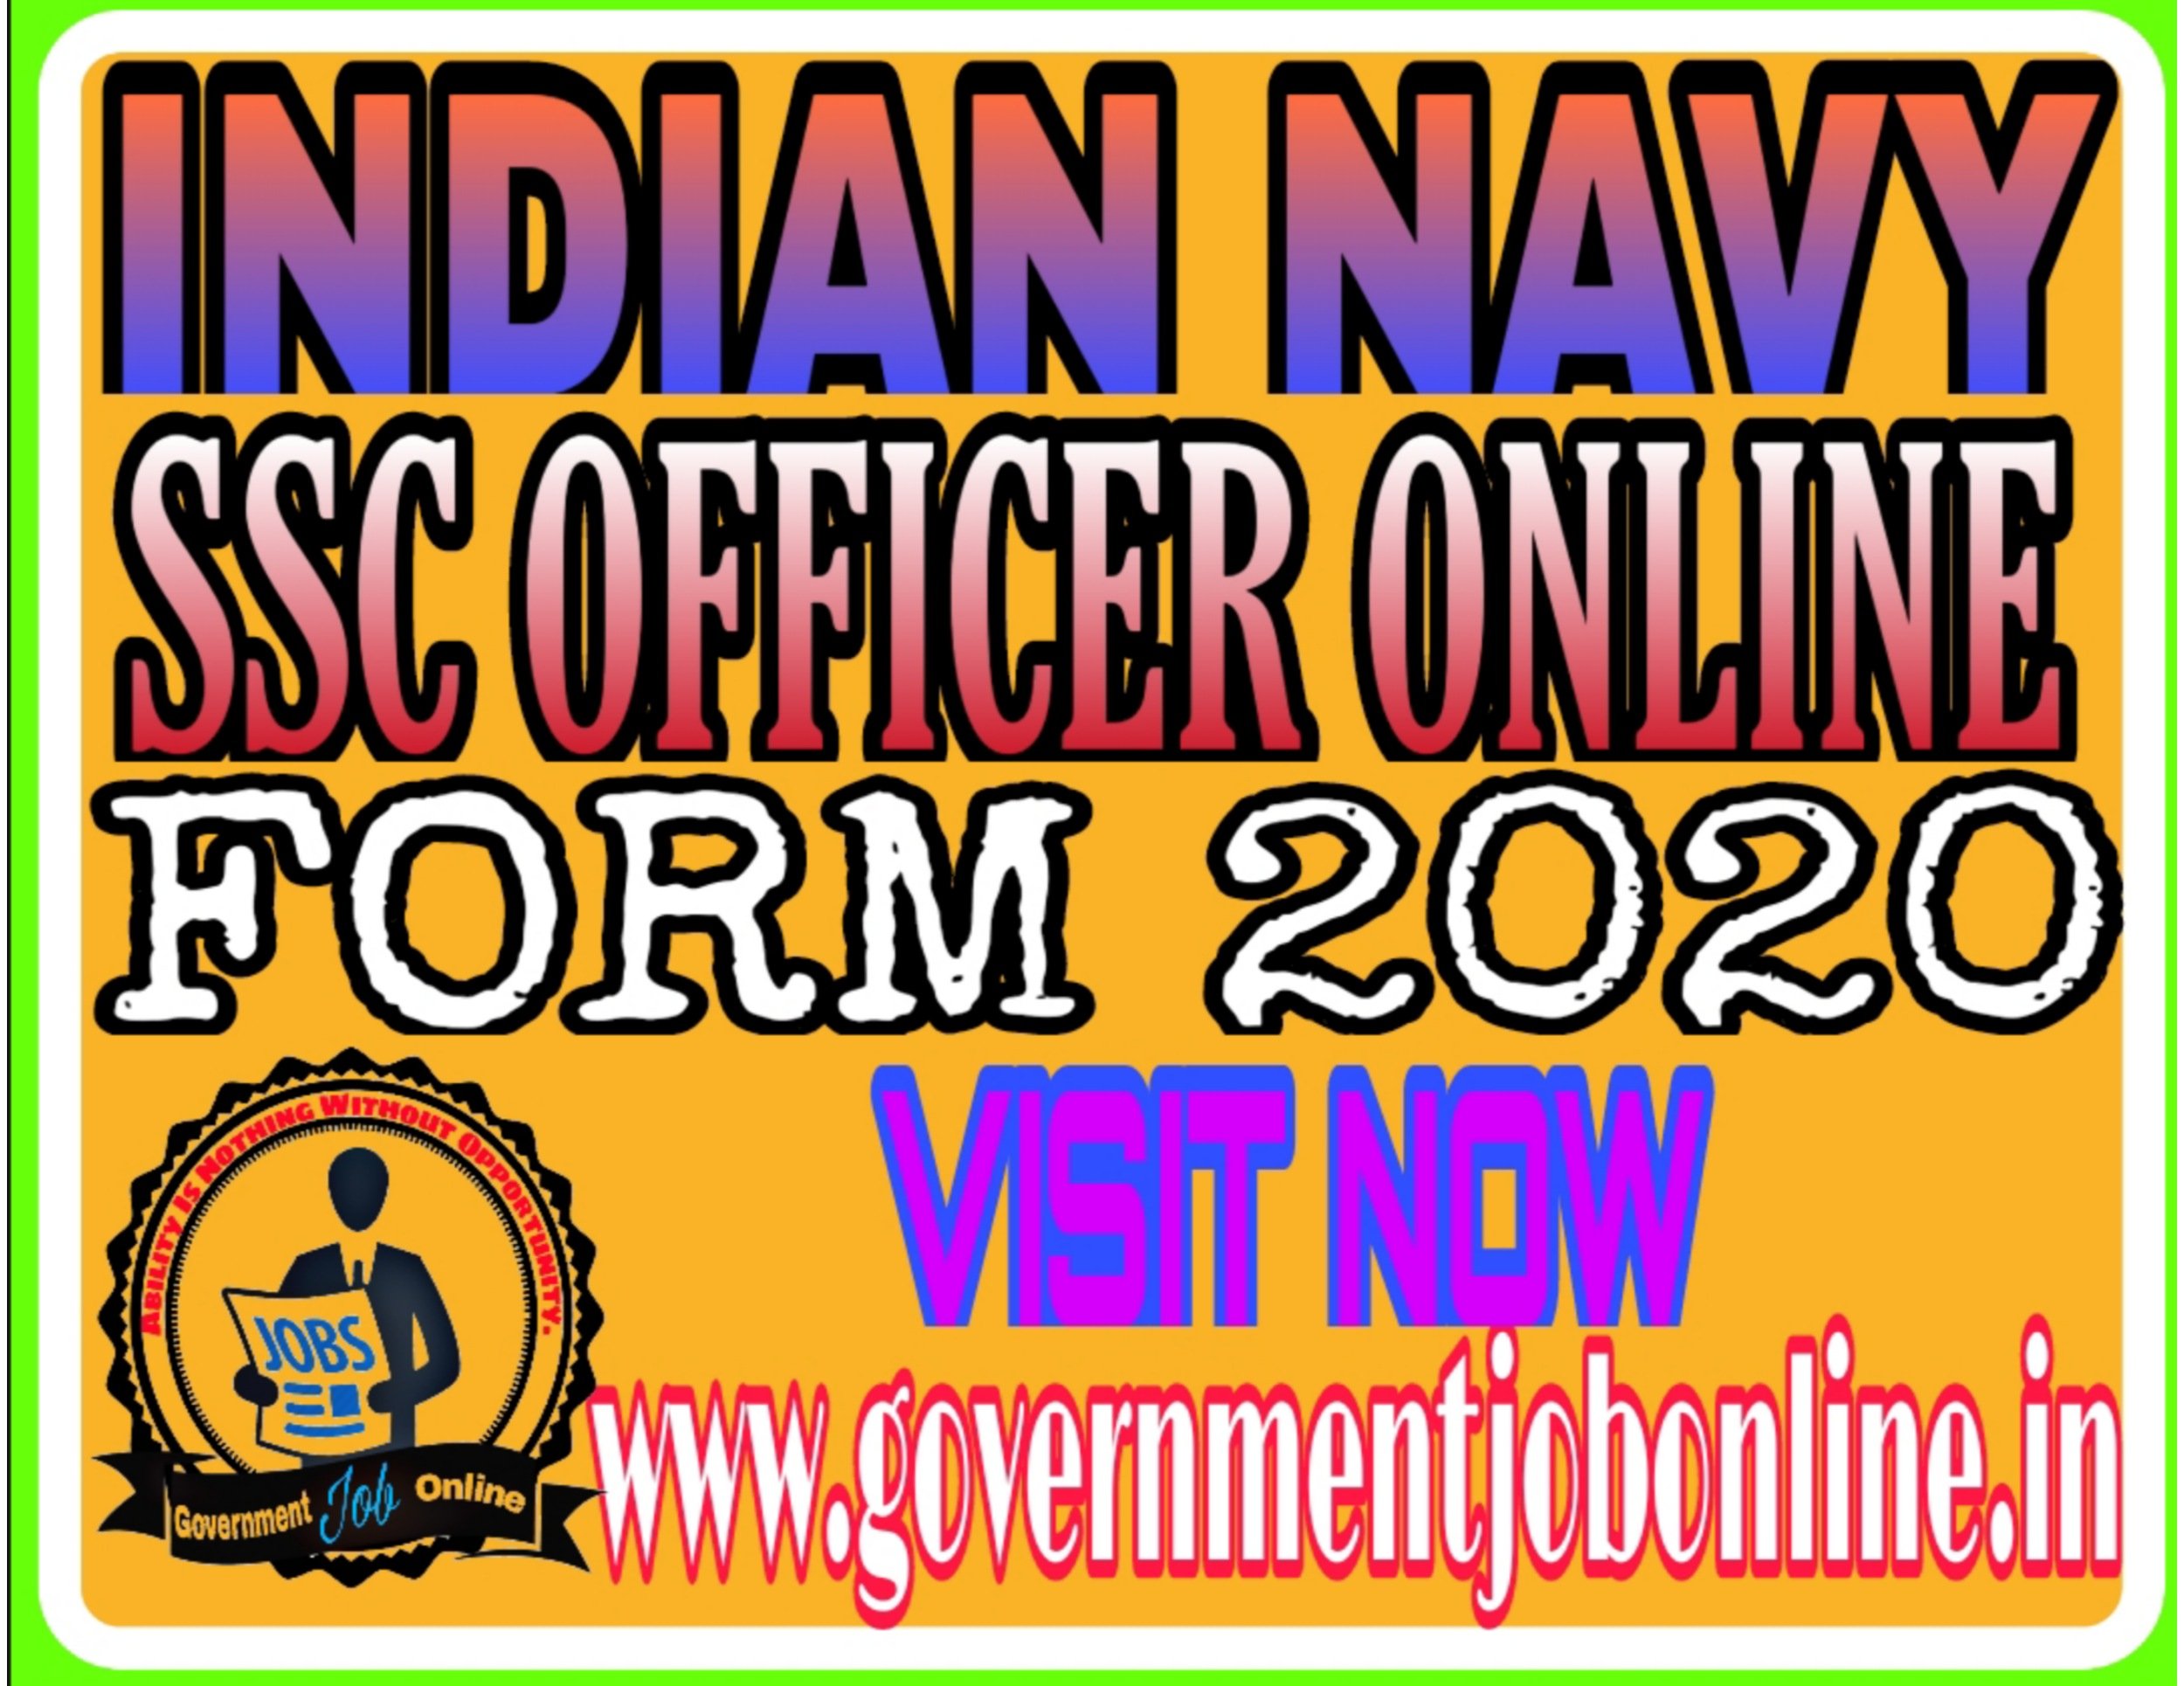 Navy SSC Officers Recruitment Online Form 2020